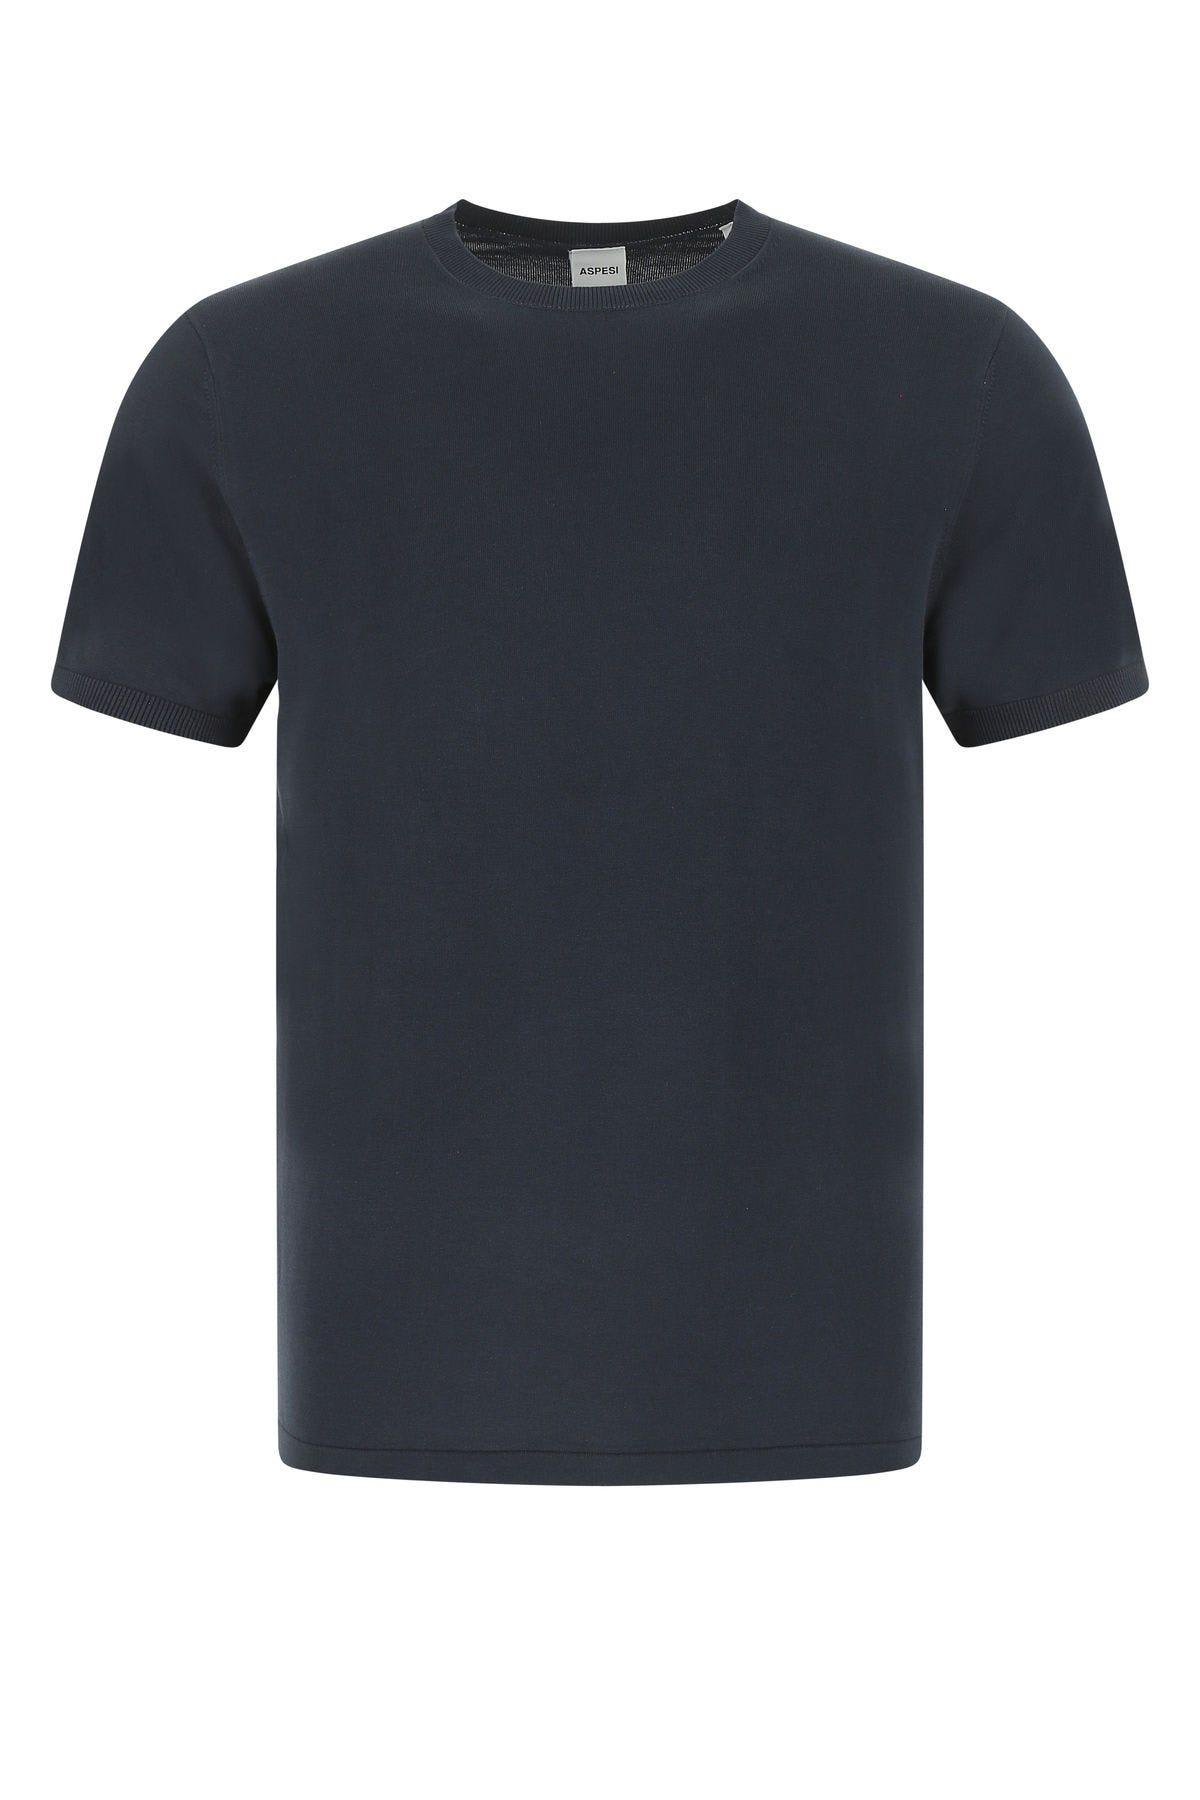 Aspesi Dark Blue Cotton T-shirt